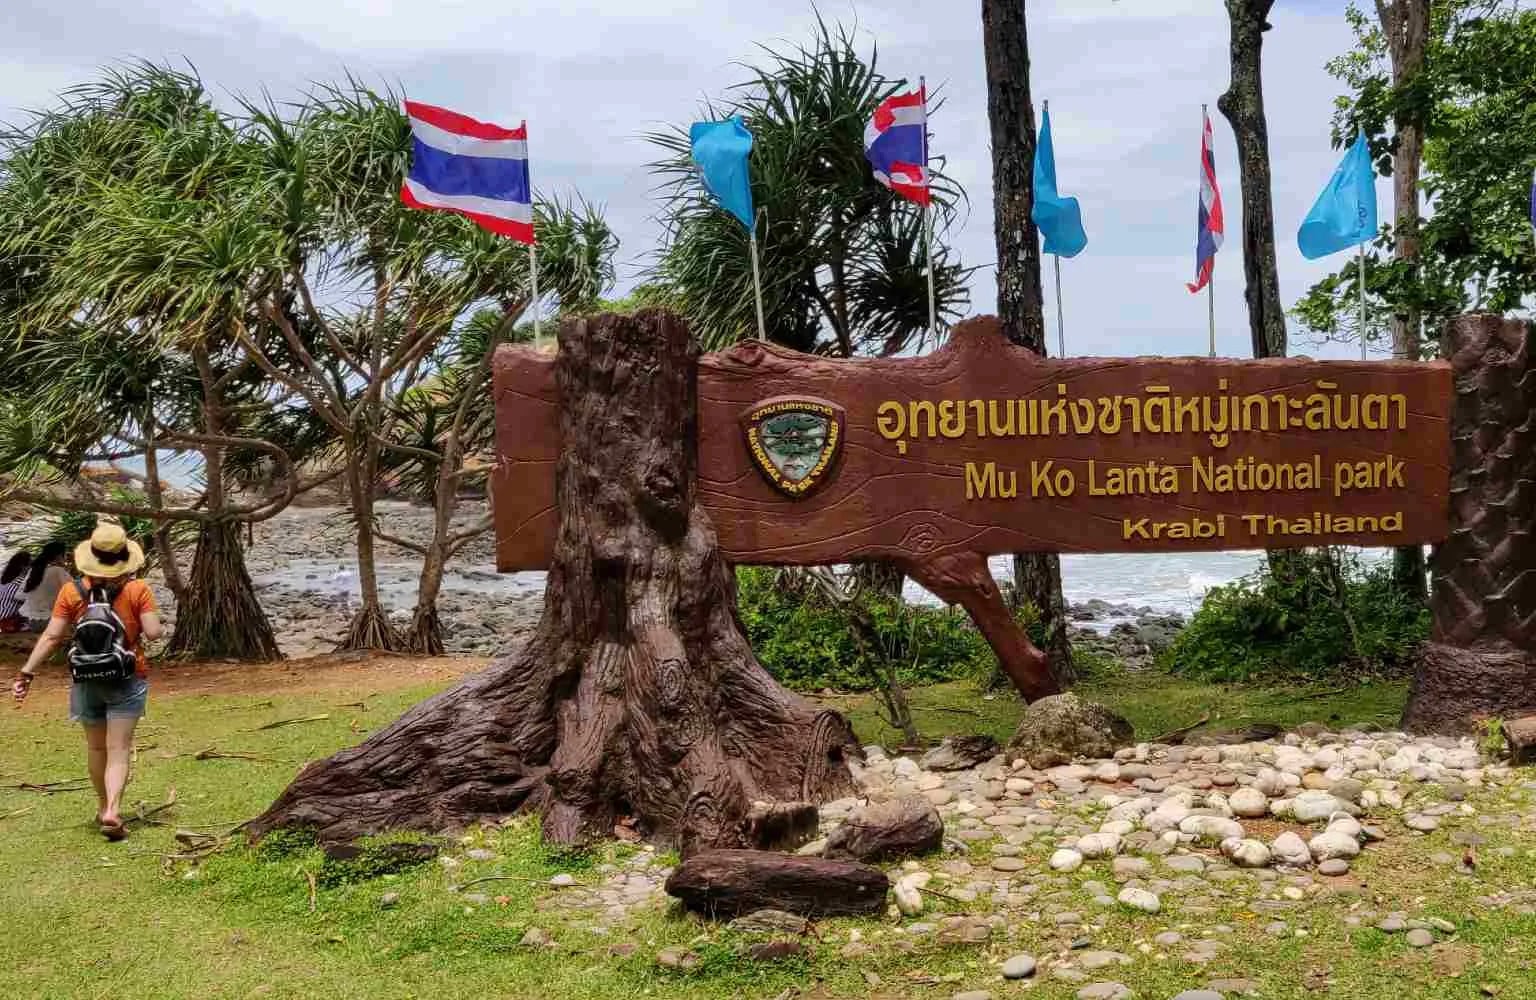 The famous Mu Ko Lanta National Park